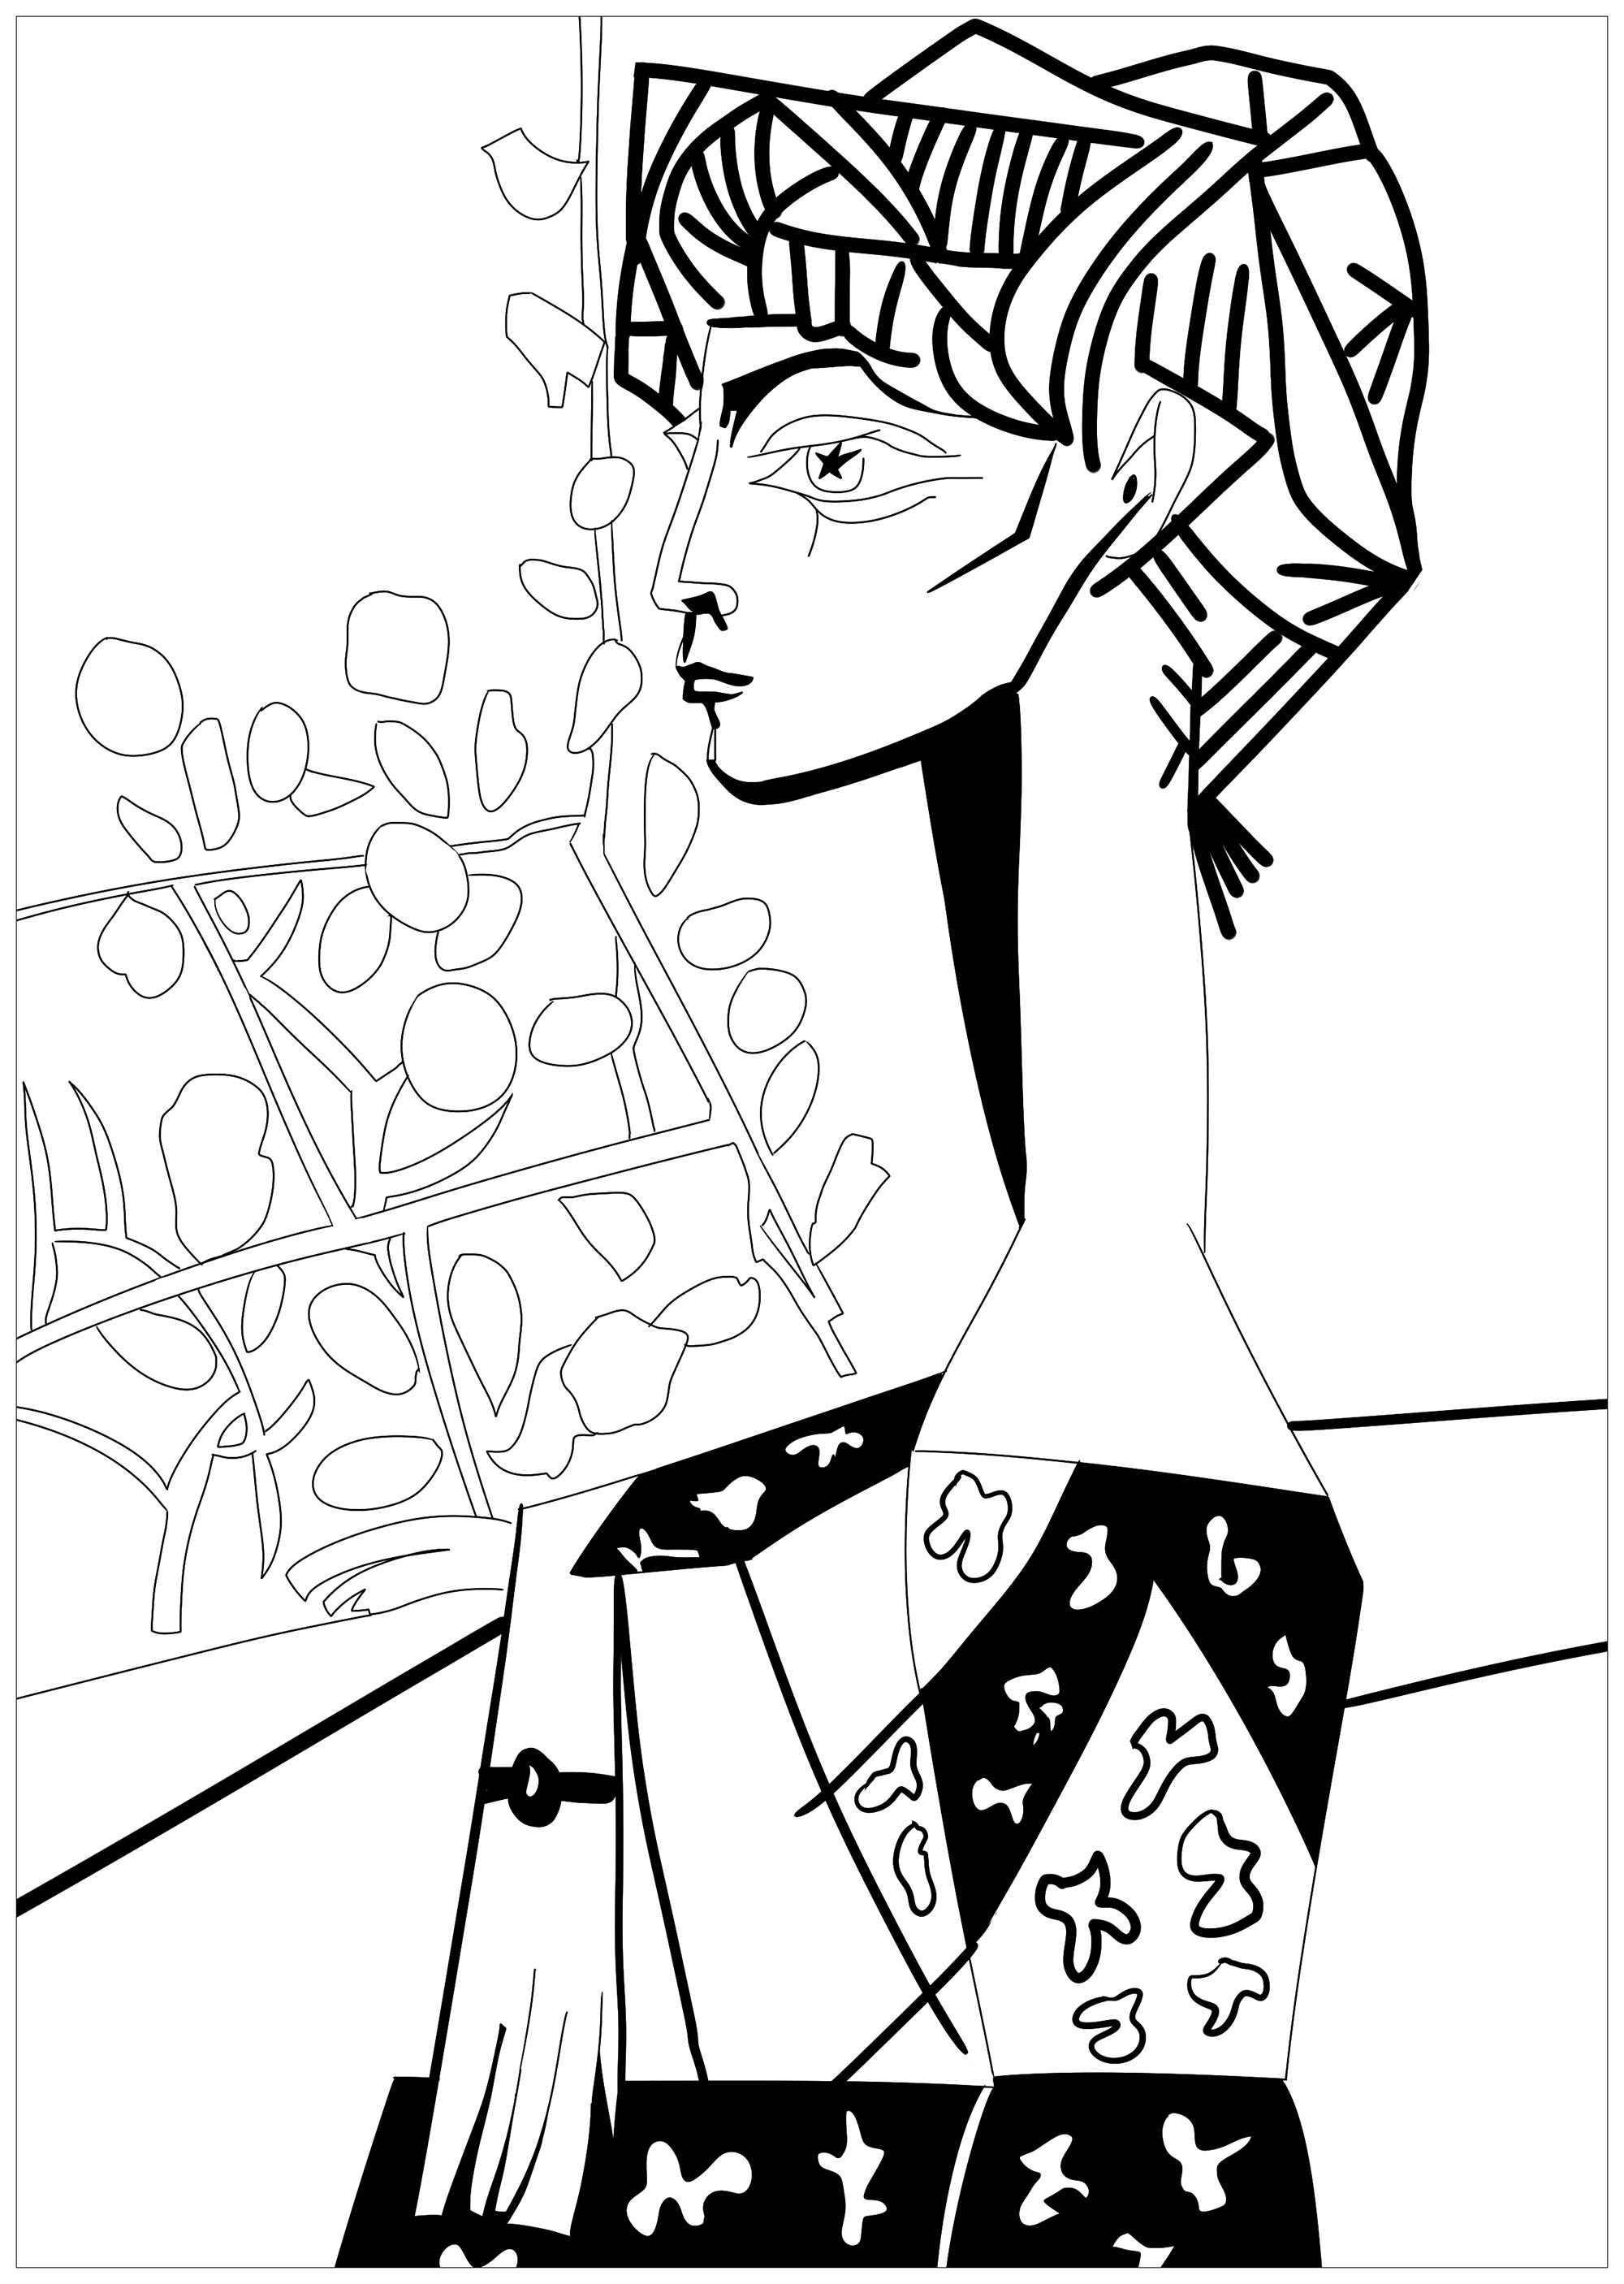 Pablo Picasso - Jacqueline con flores - Obra de arte - Colorear para Adultos